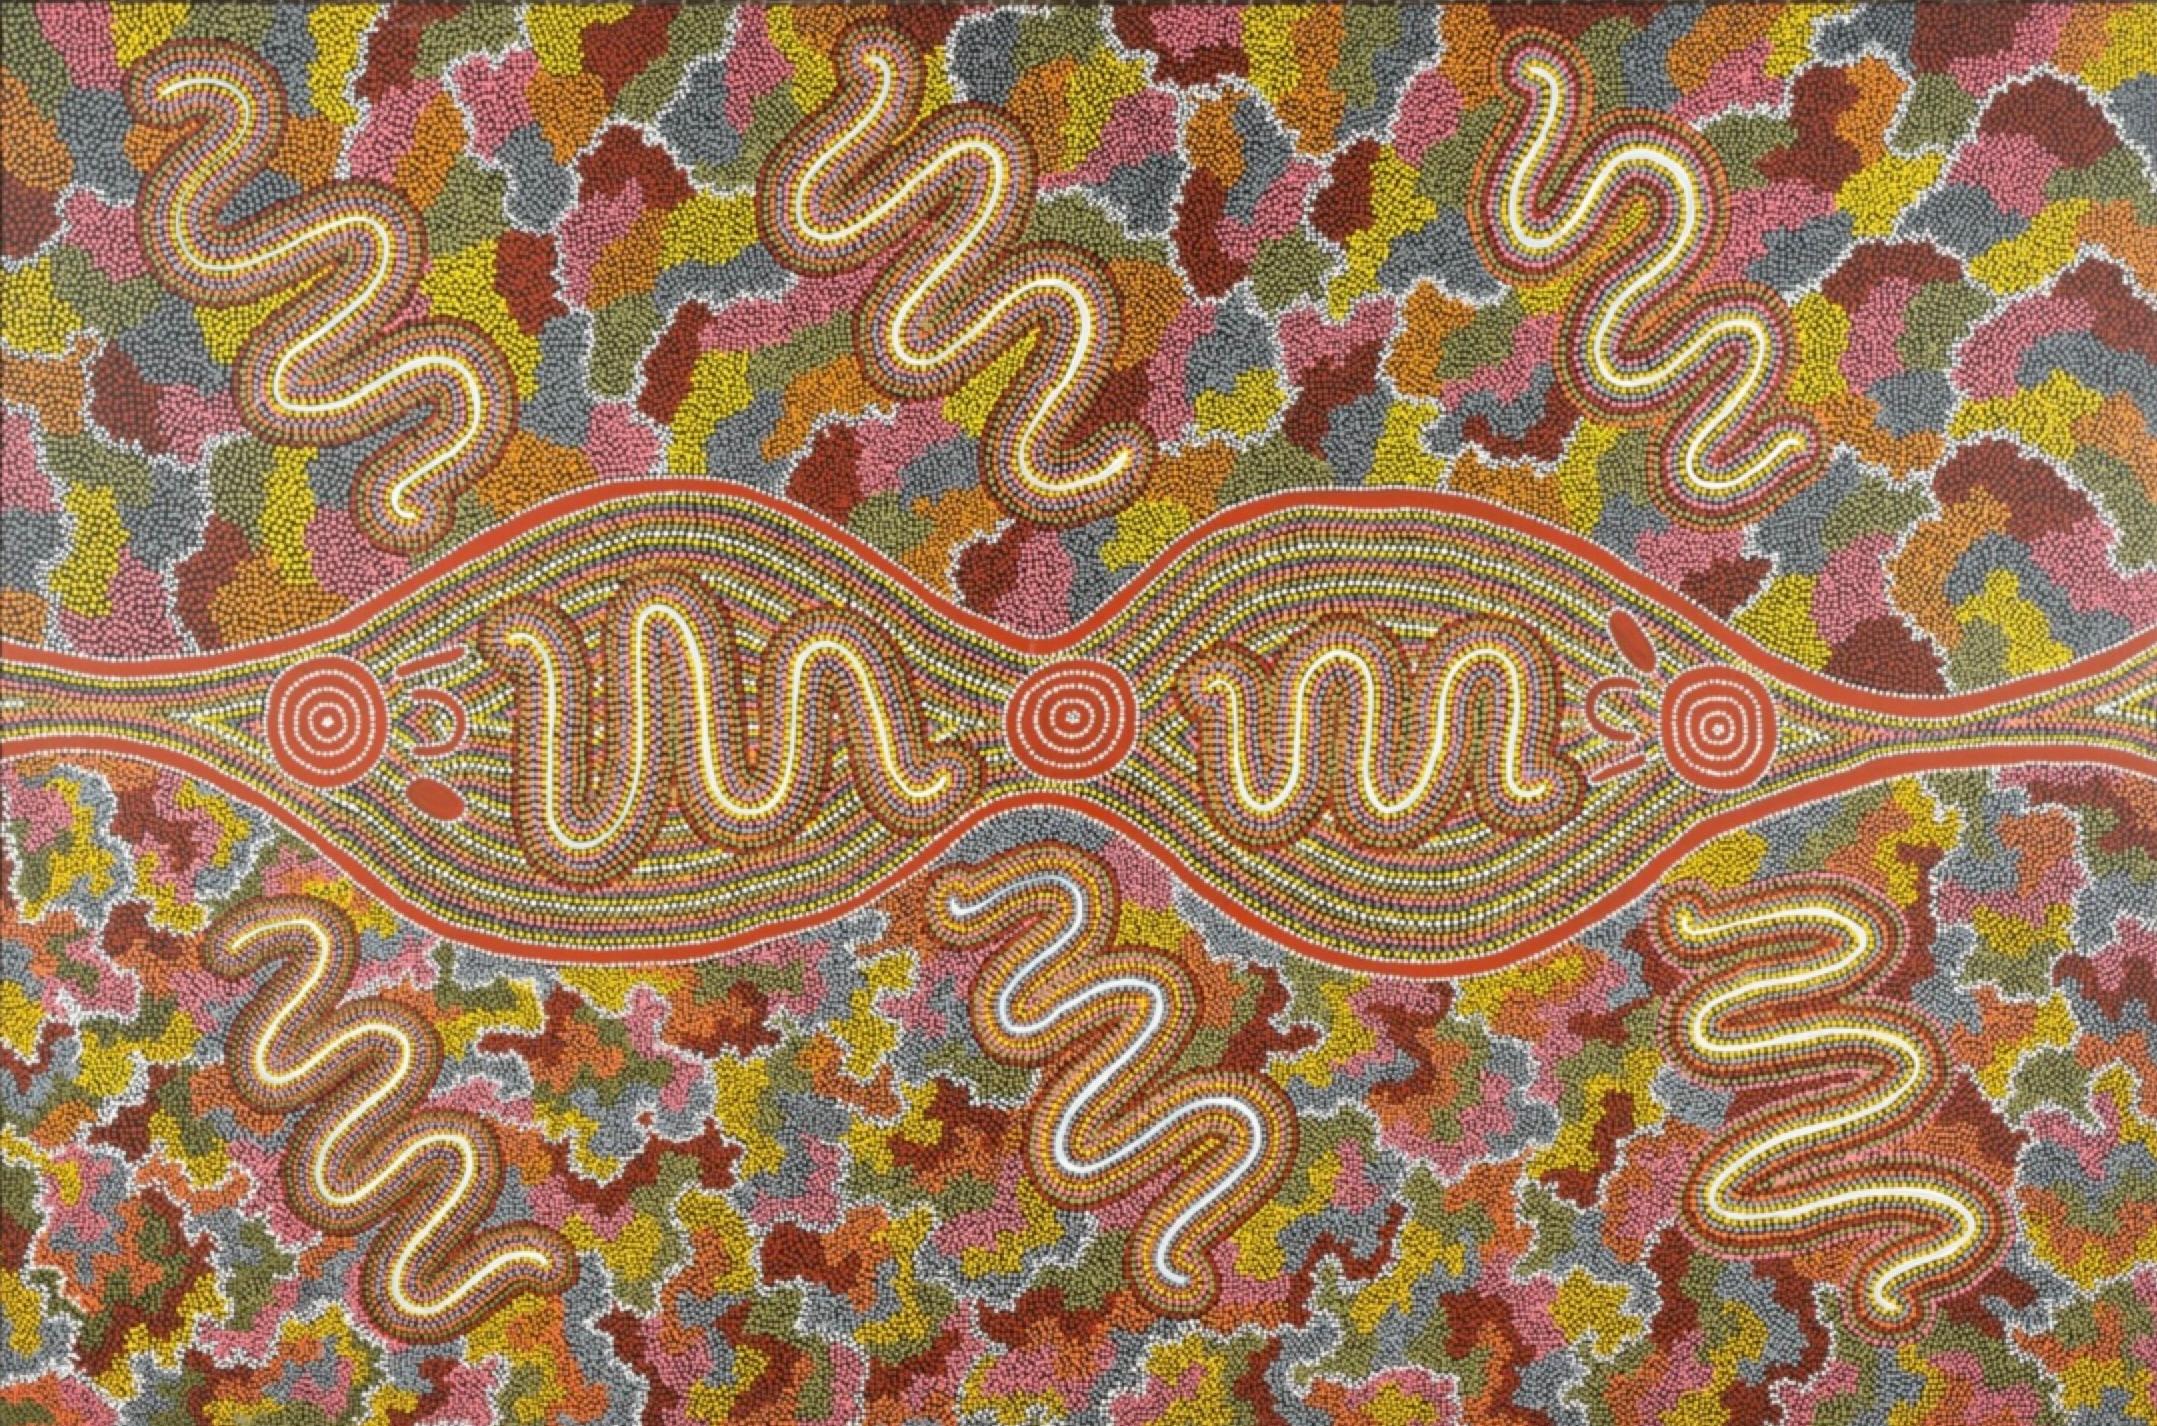 Sonda Turner Nampijinpa Abstract Painting - Worm Dreaming @ Mt. Wedge LARGE Aboriginal Papunya Australian Female Artist 1988